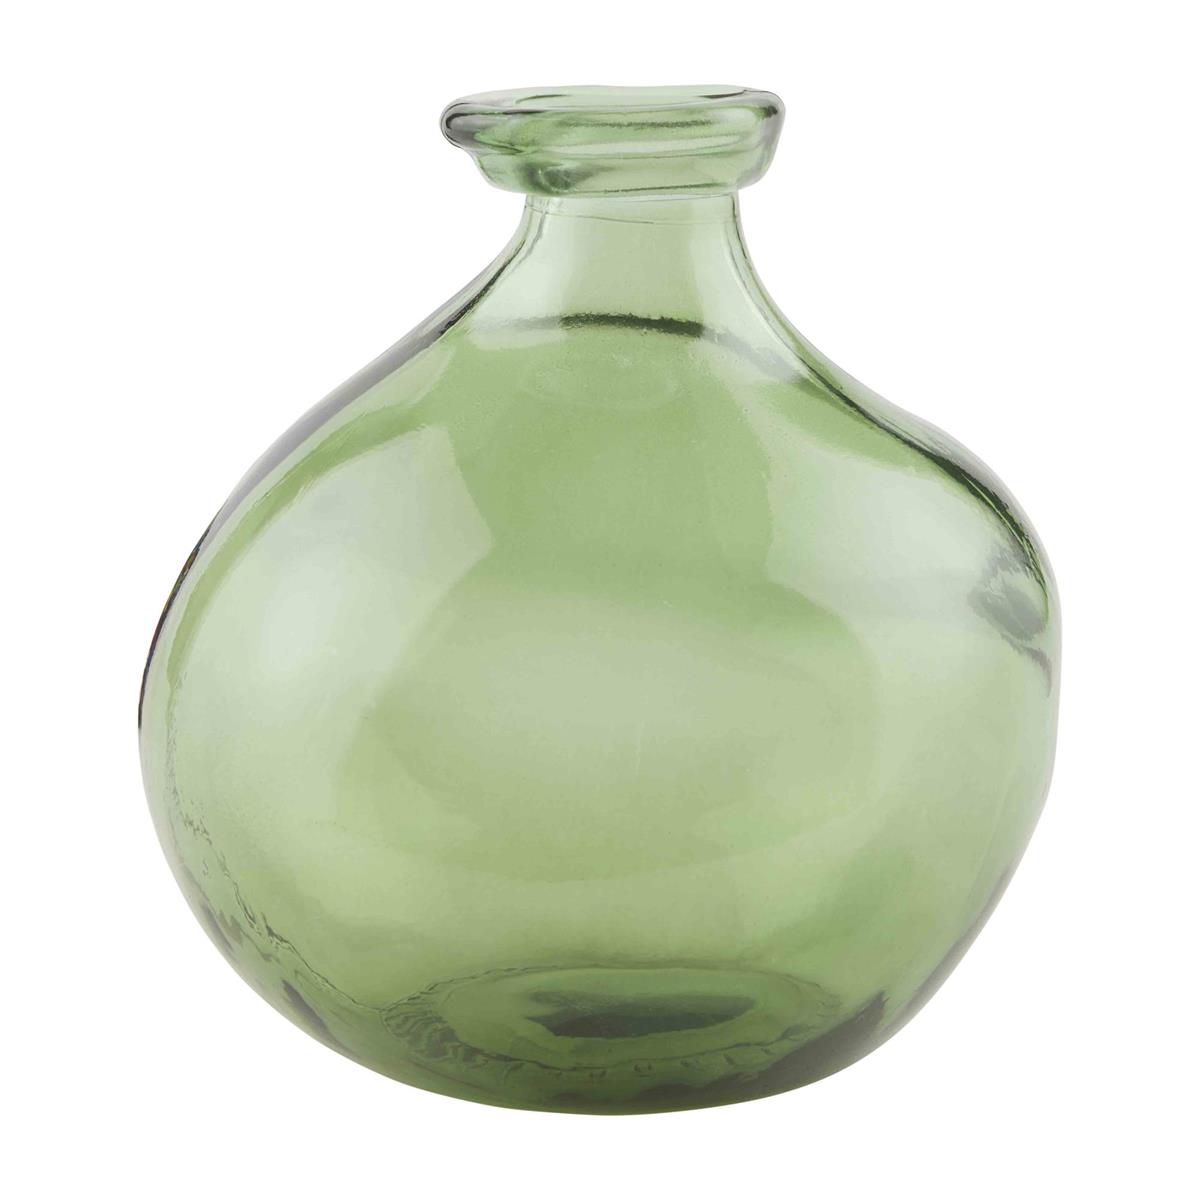 green spanish glass vase on a white background